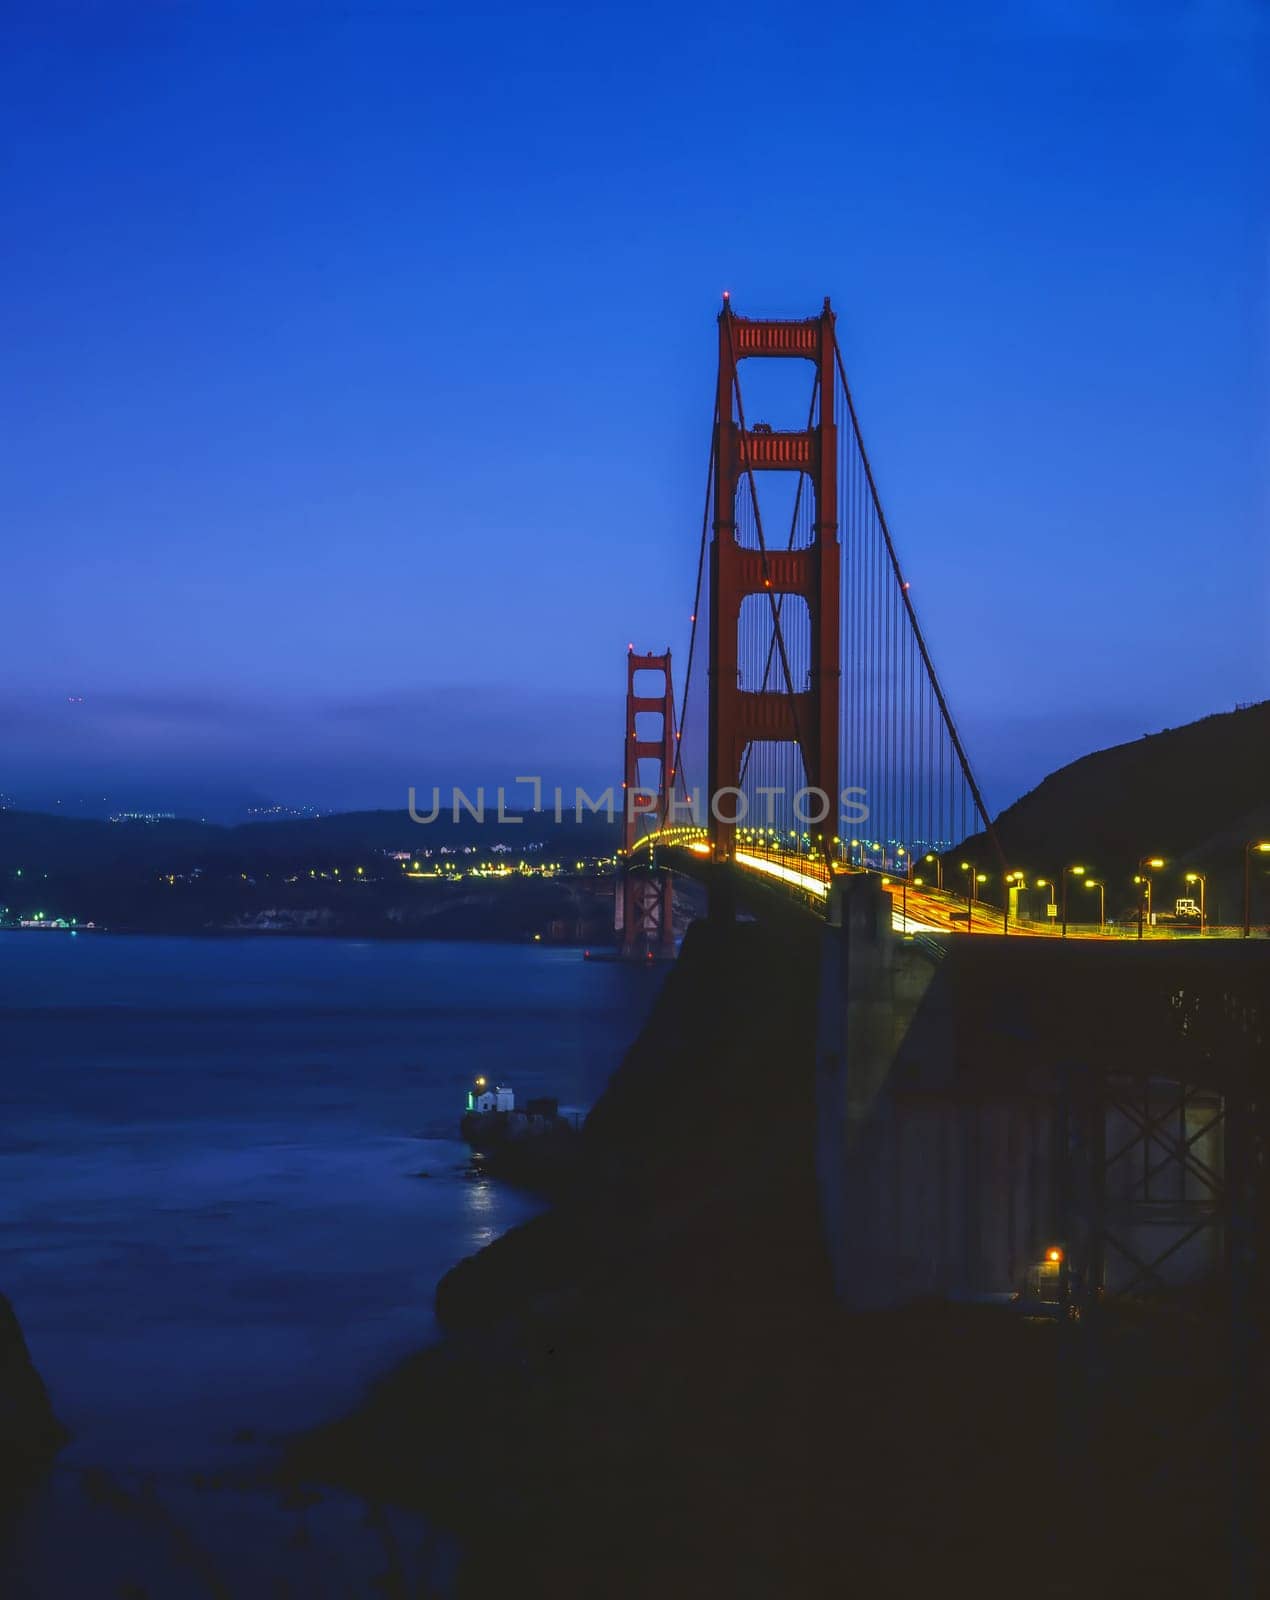 Golden Gate Bridge at night, California